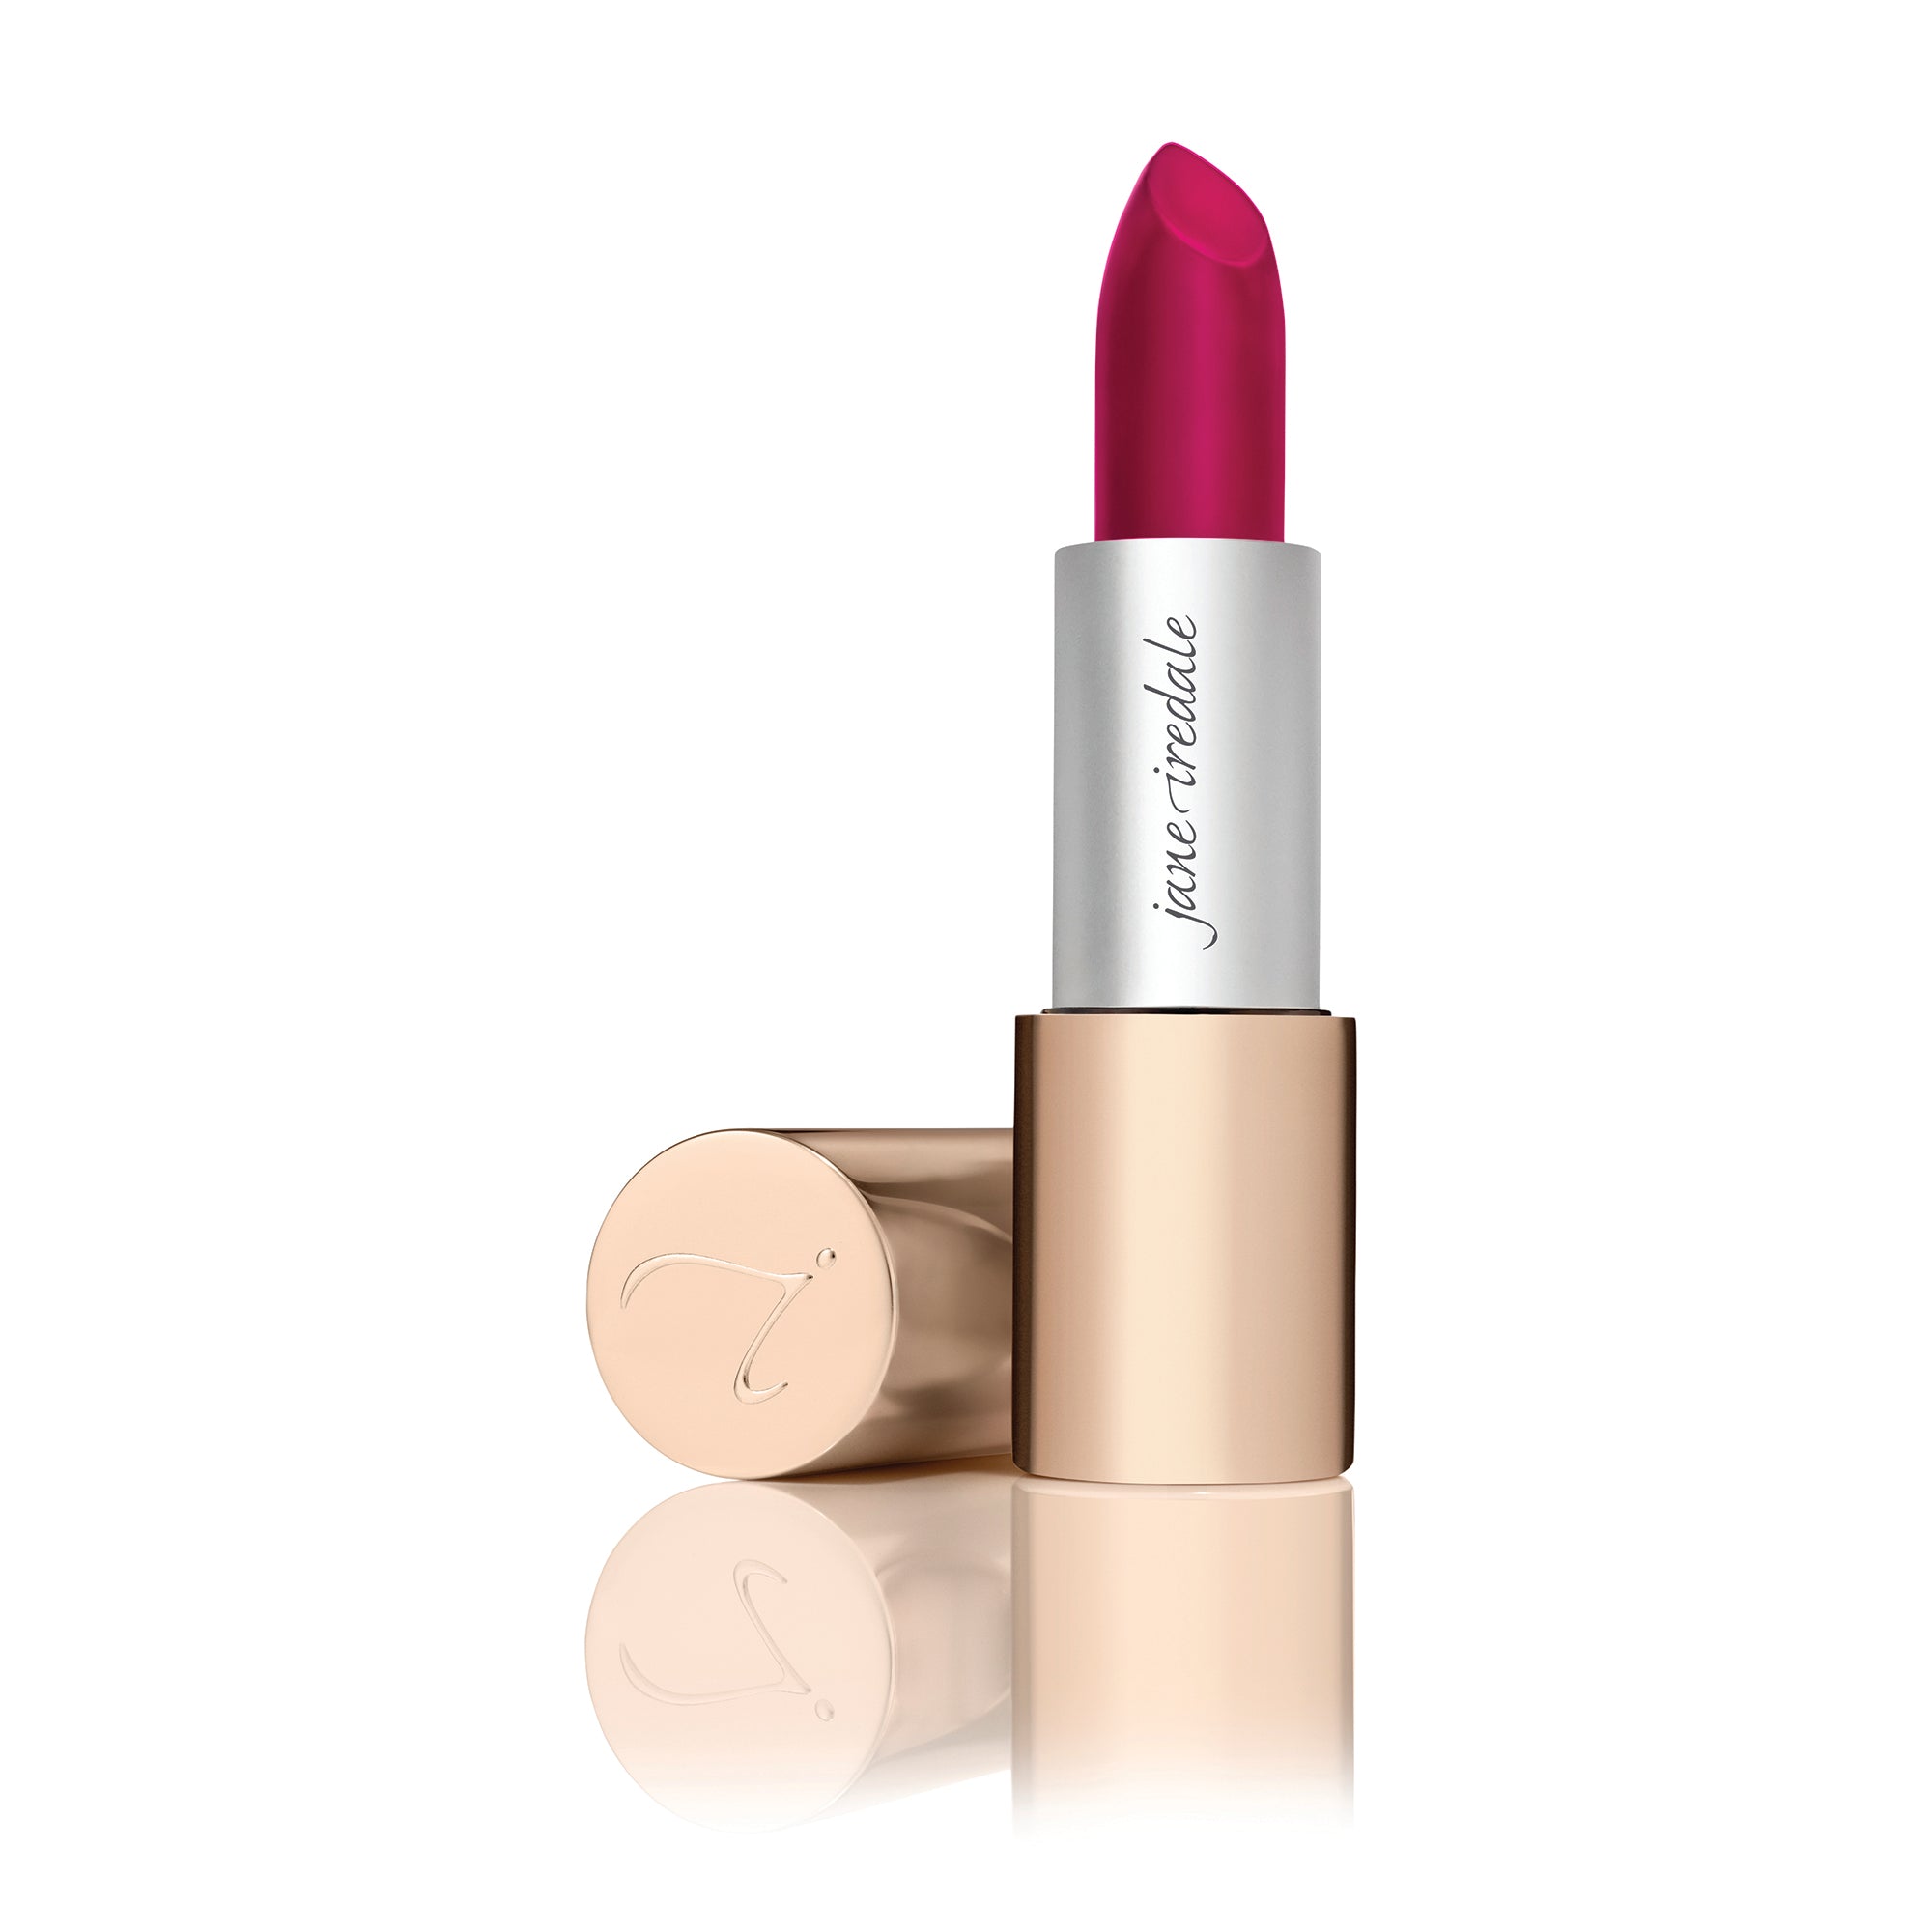 Jane Iredale Triple Luxe Long Lasting Naturally Moist Lipstick / NATALIE